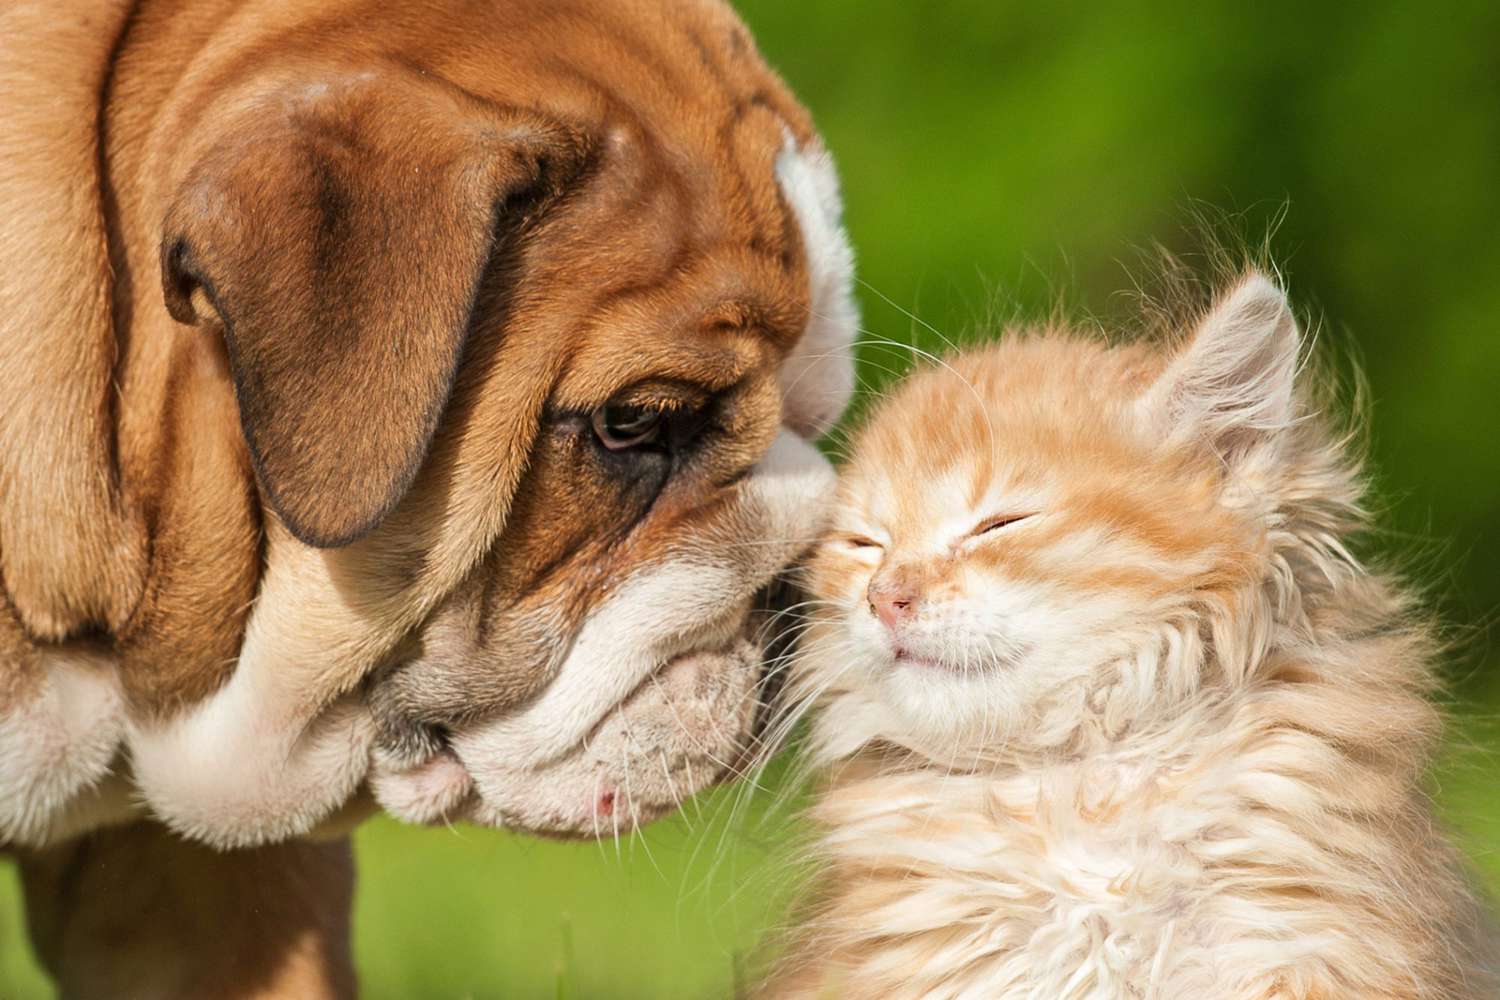 english bulldog nuzzling an orange kitten